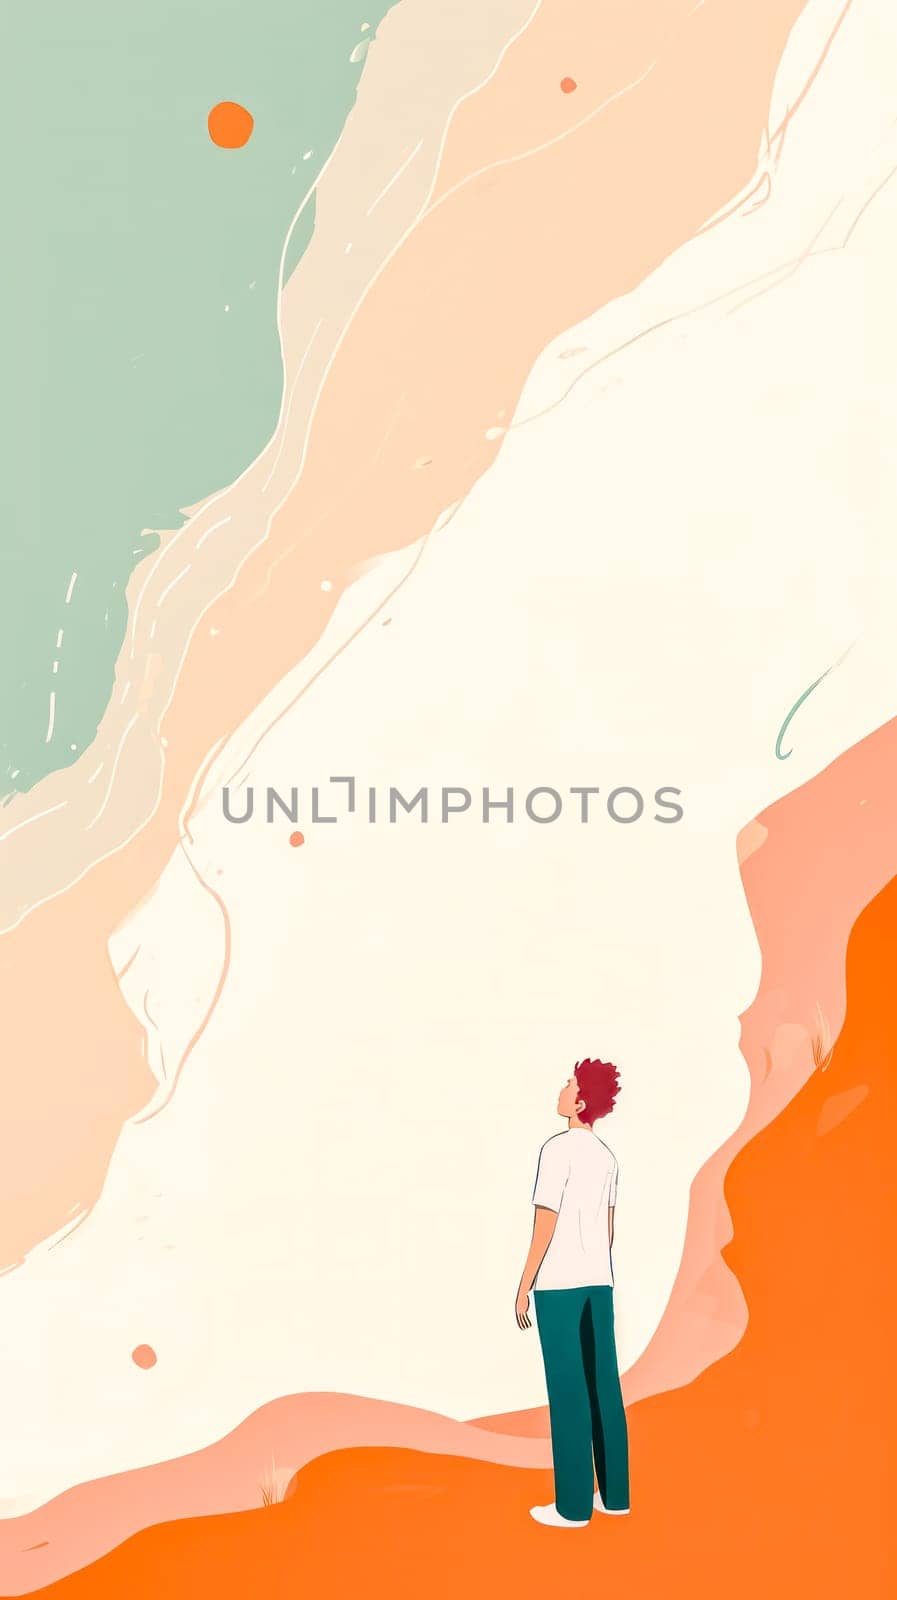 Contemplative figure against a minimalist desert landscape with a large sun. by Edophoto